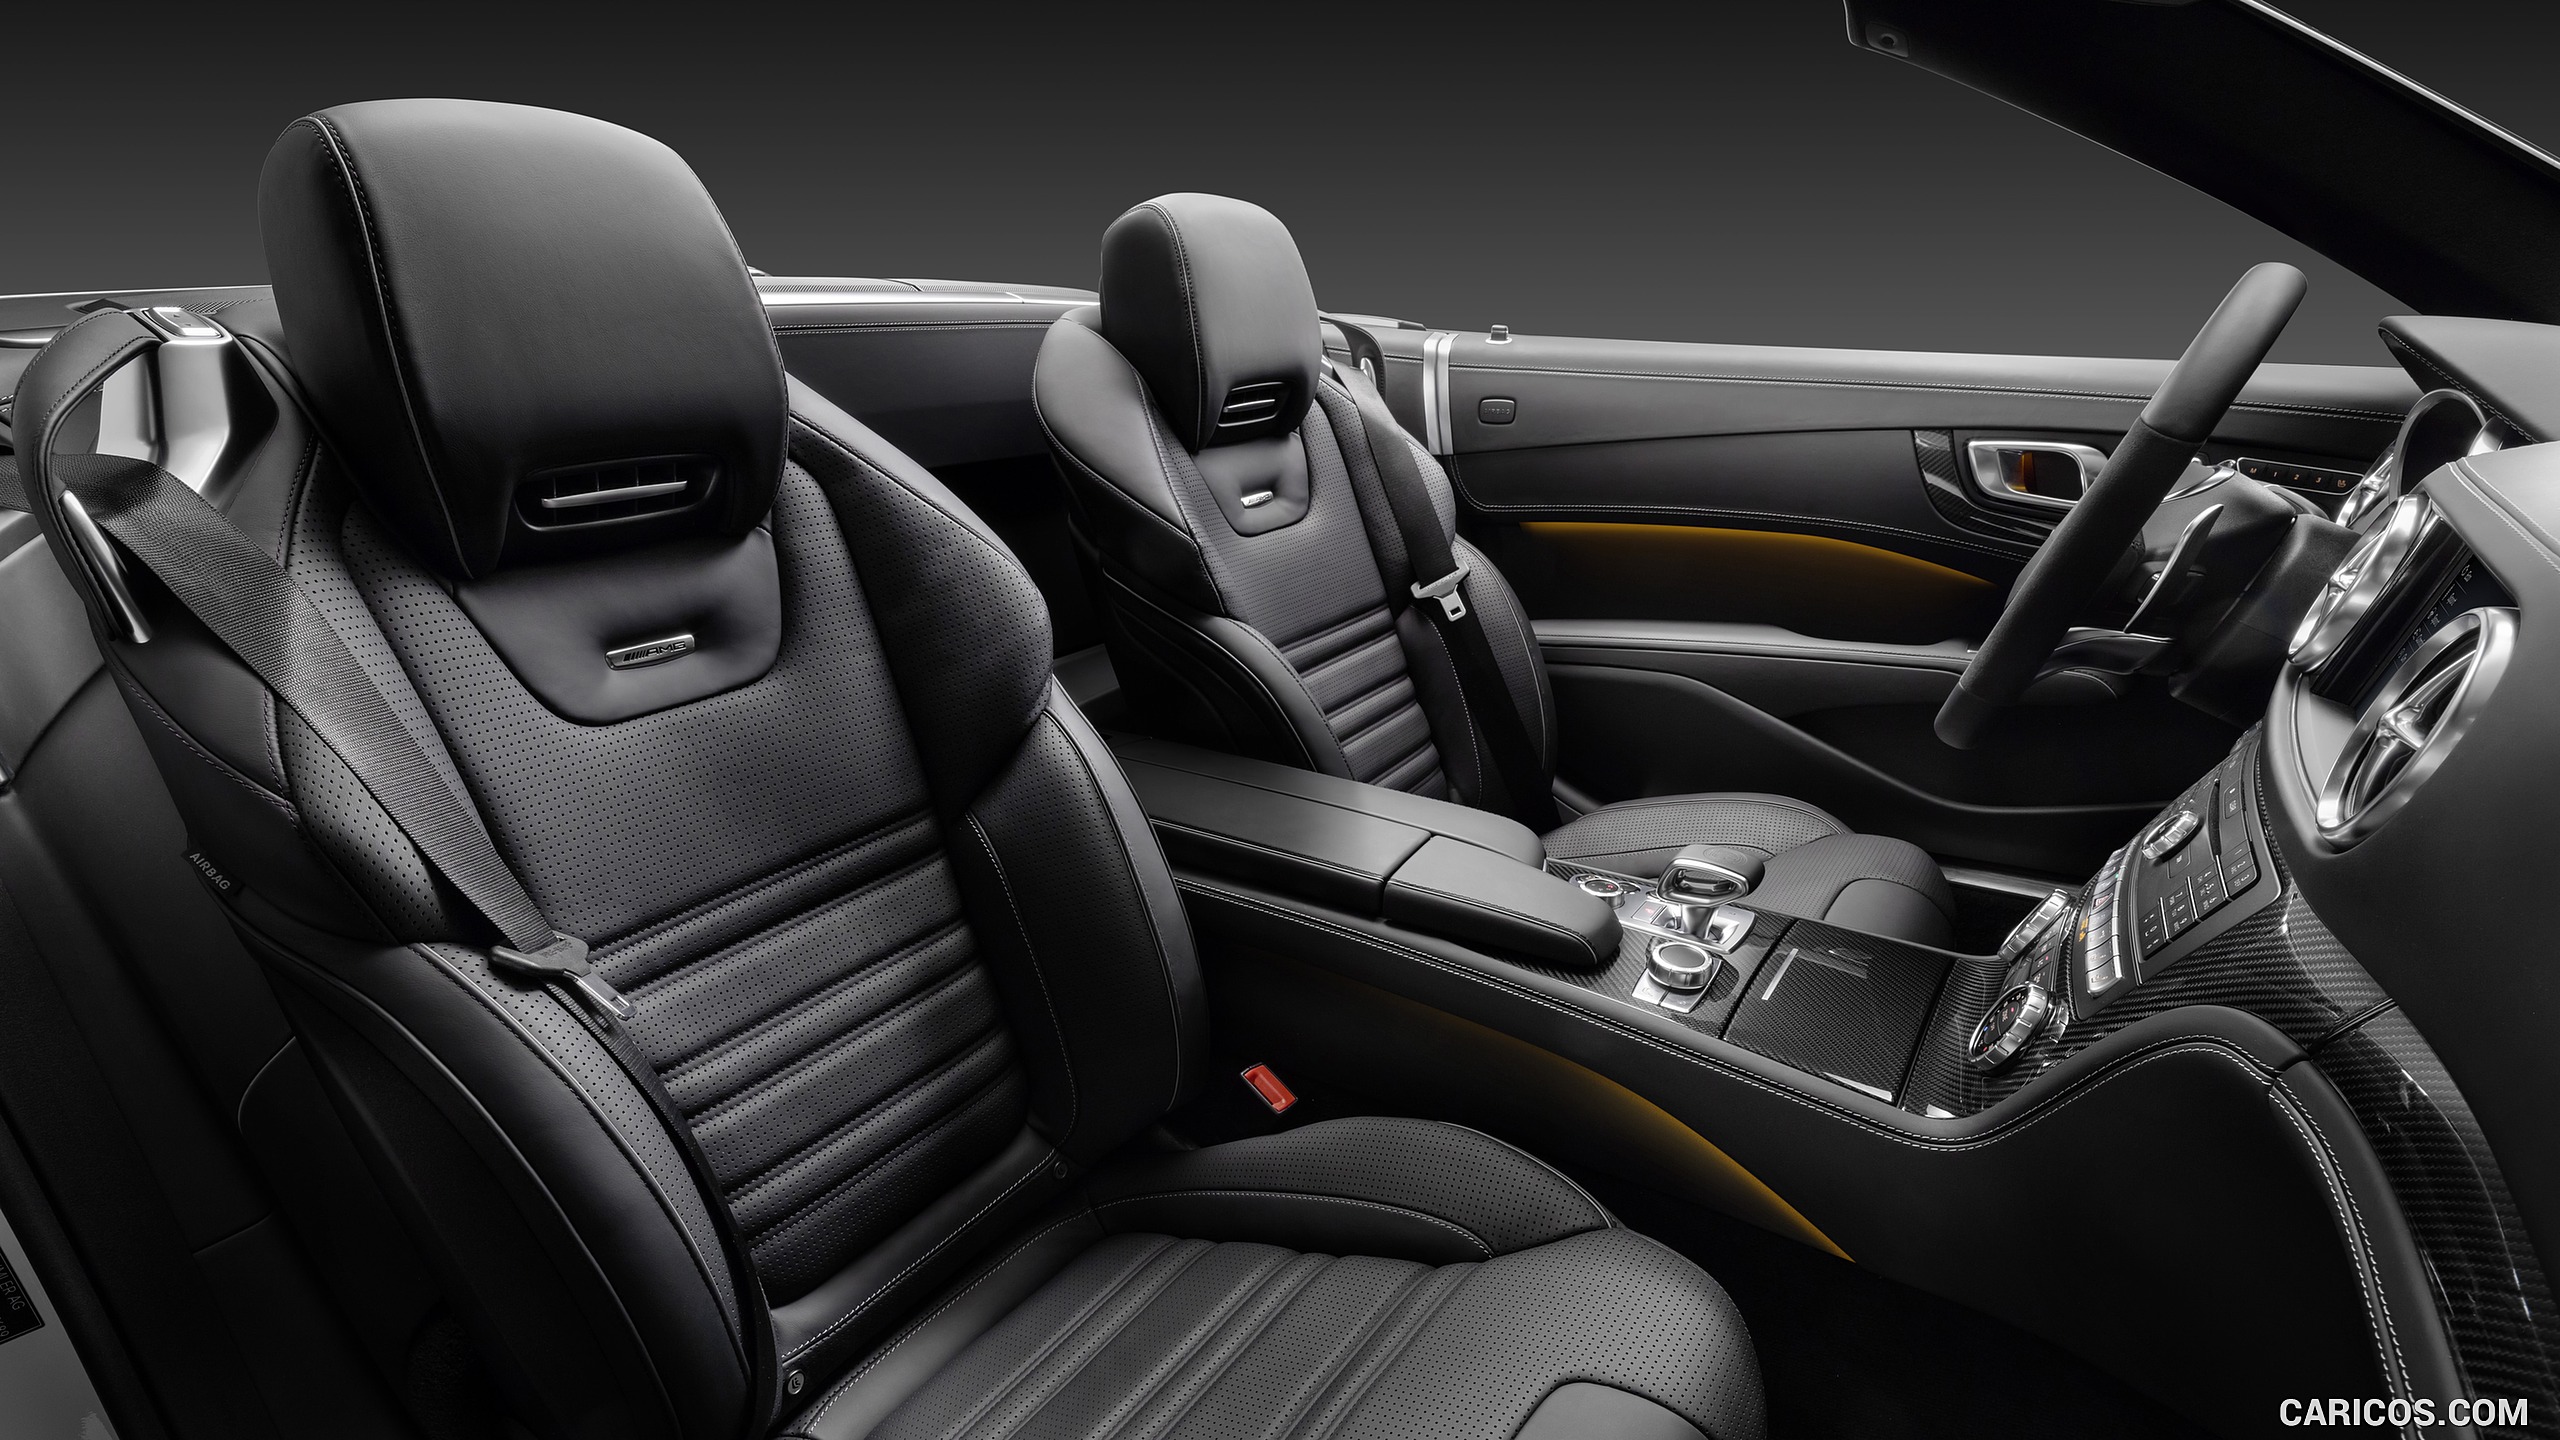 2017 Mercedes-AMG SL 63 - Leather Black Interior with AMG Carbon Trim - Interior, #25 of 39